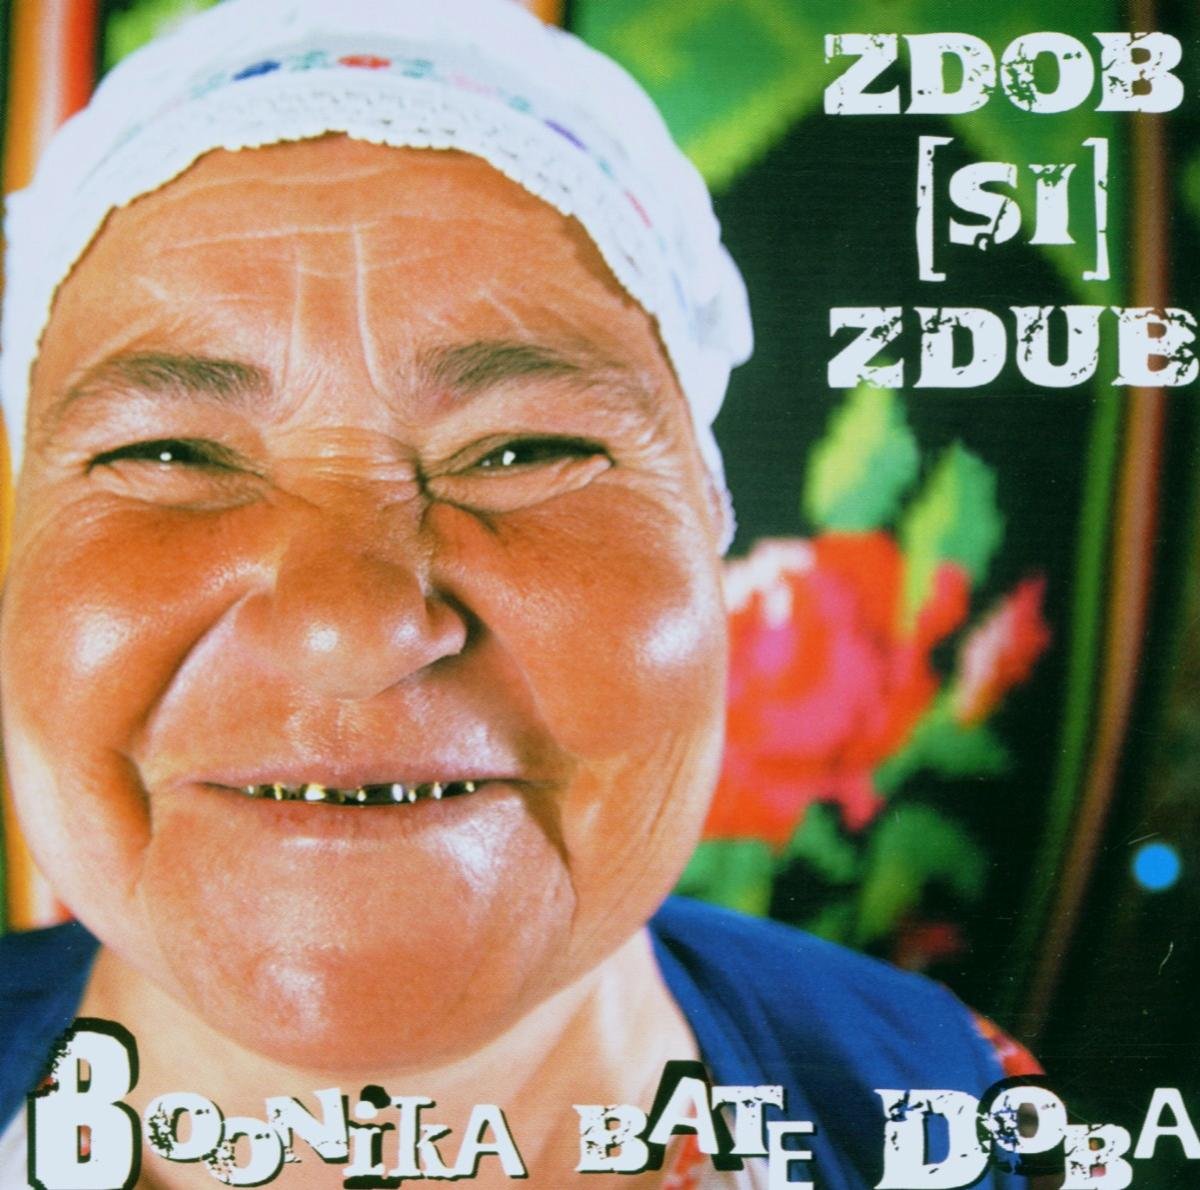 CD Shop - ZDOB SHI ZDUB BOONIKA BATE DOBA